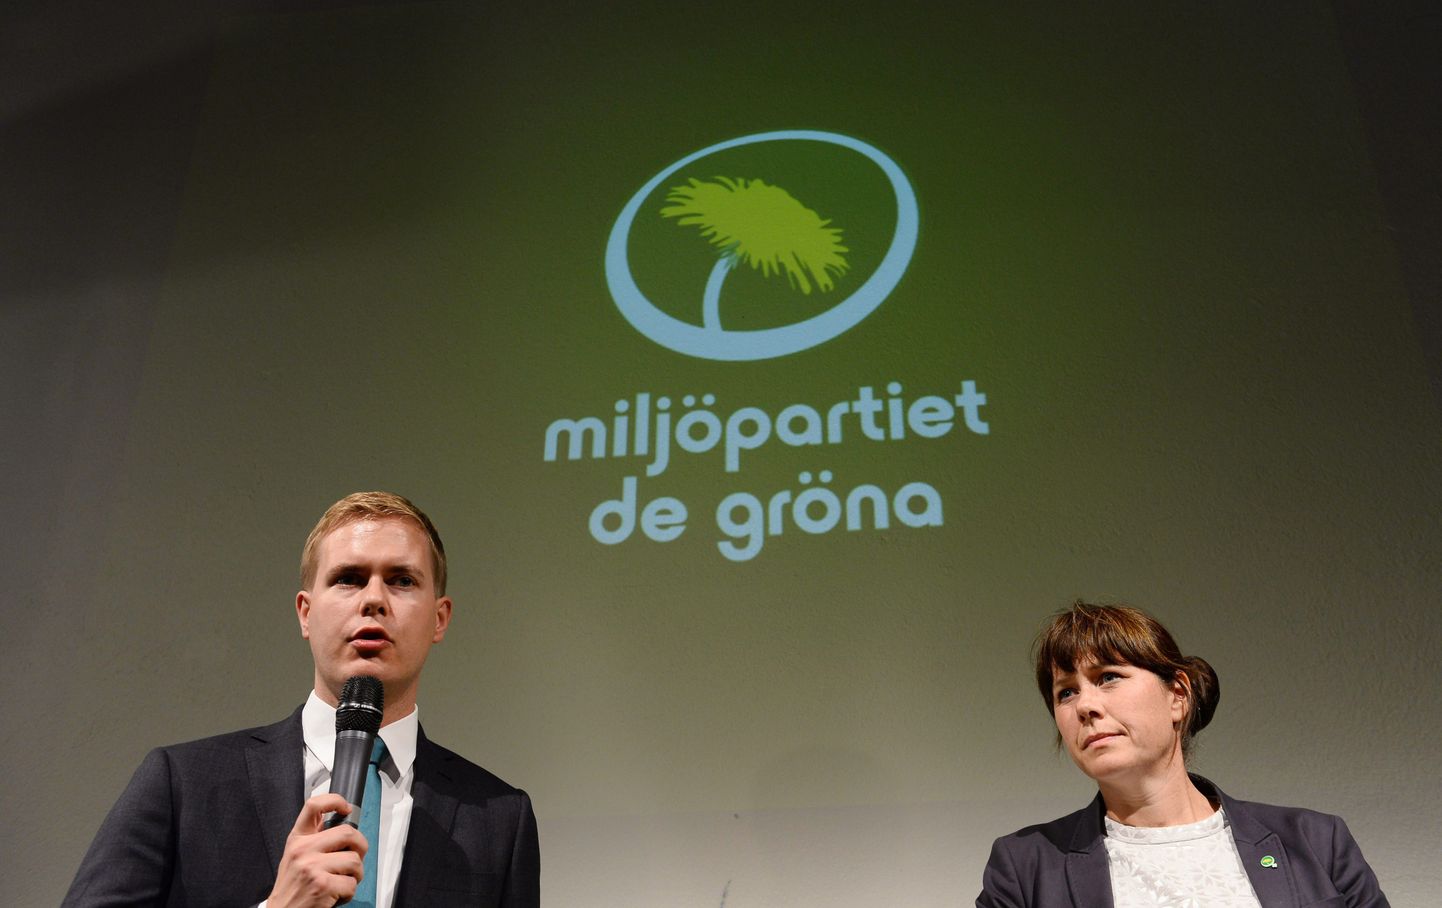 Rootsi Roheliste partei logo